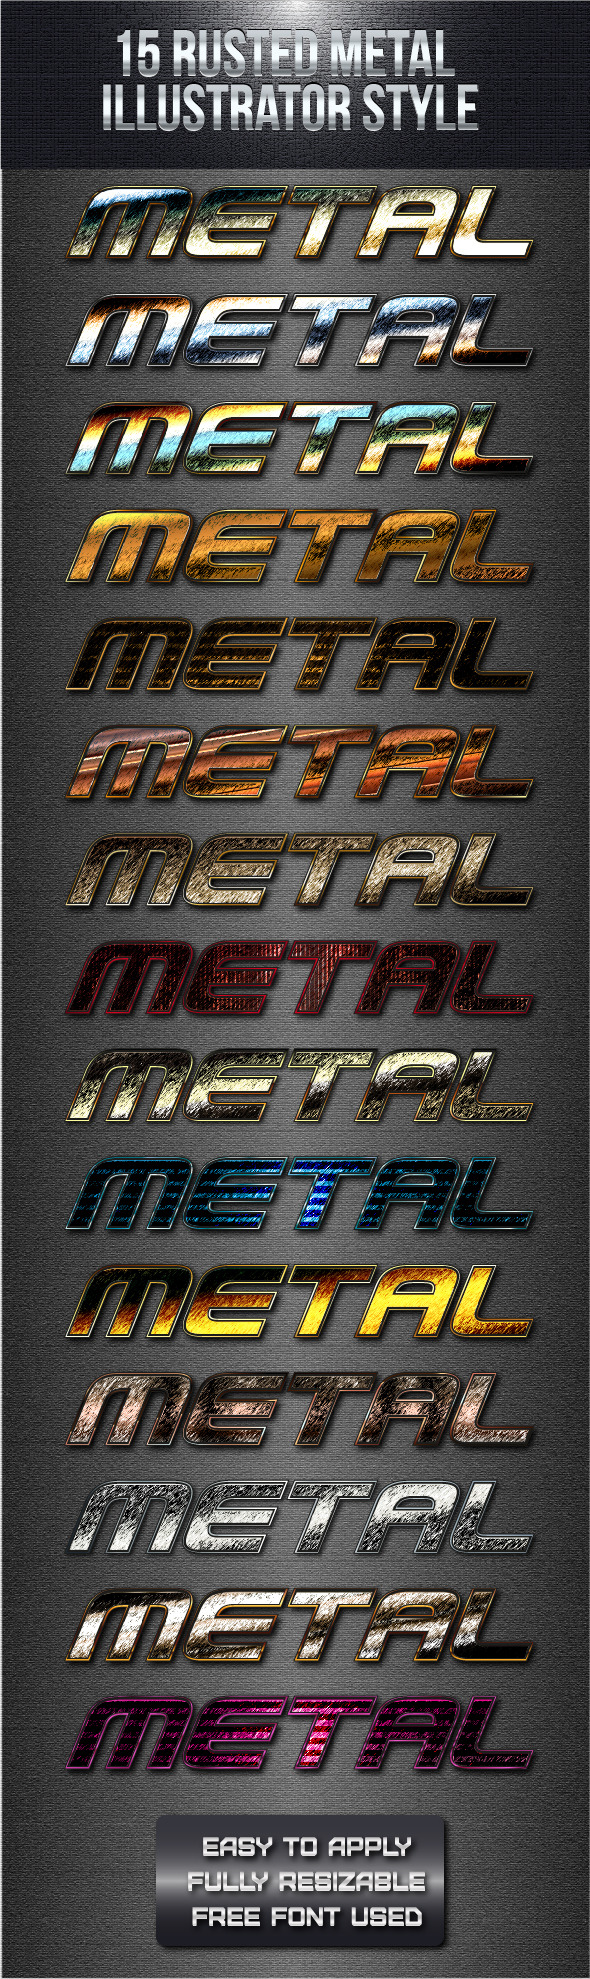 metal graphic styles illustrator download